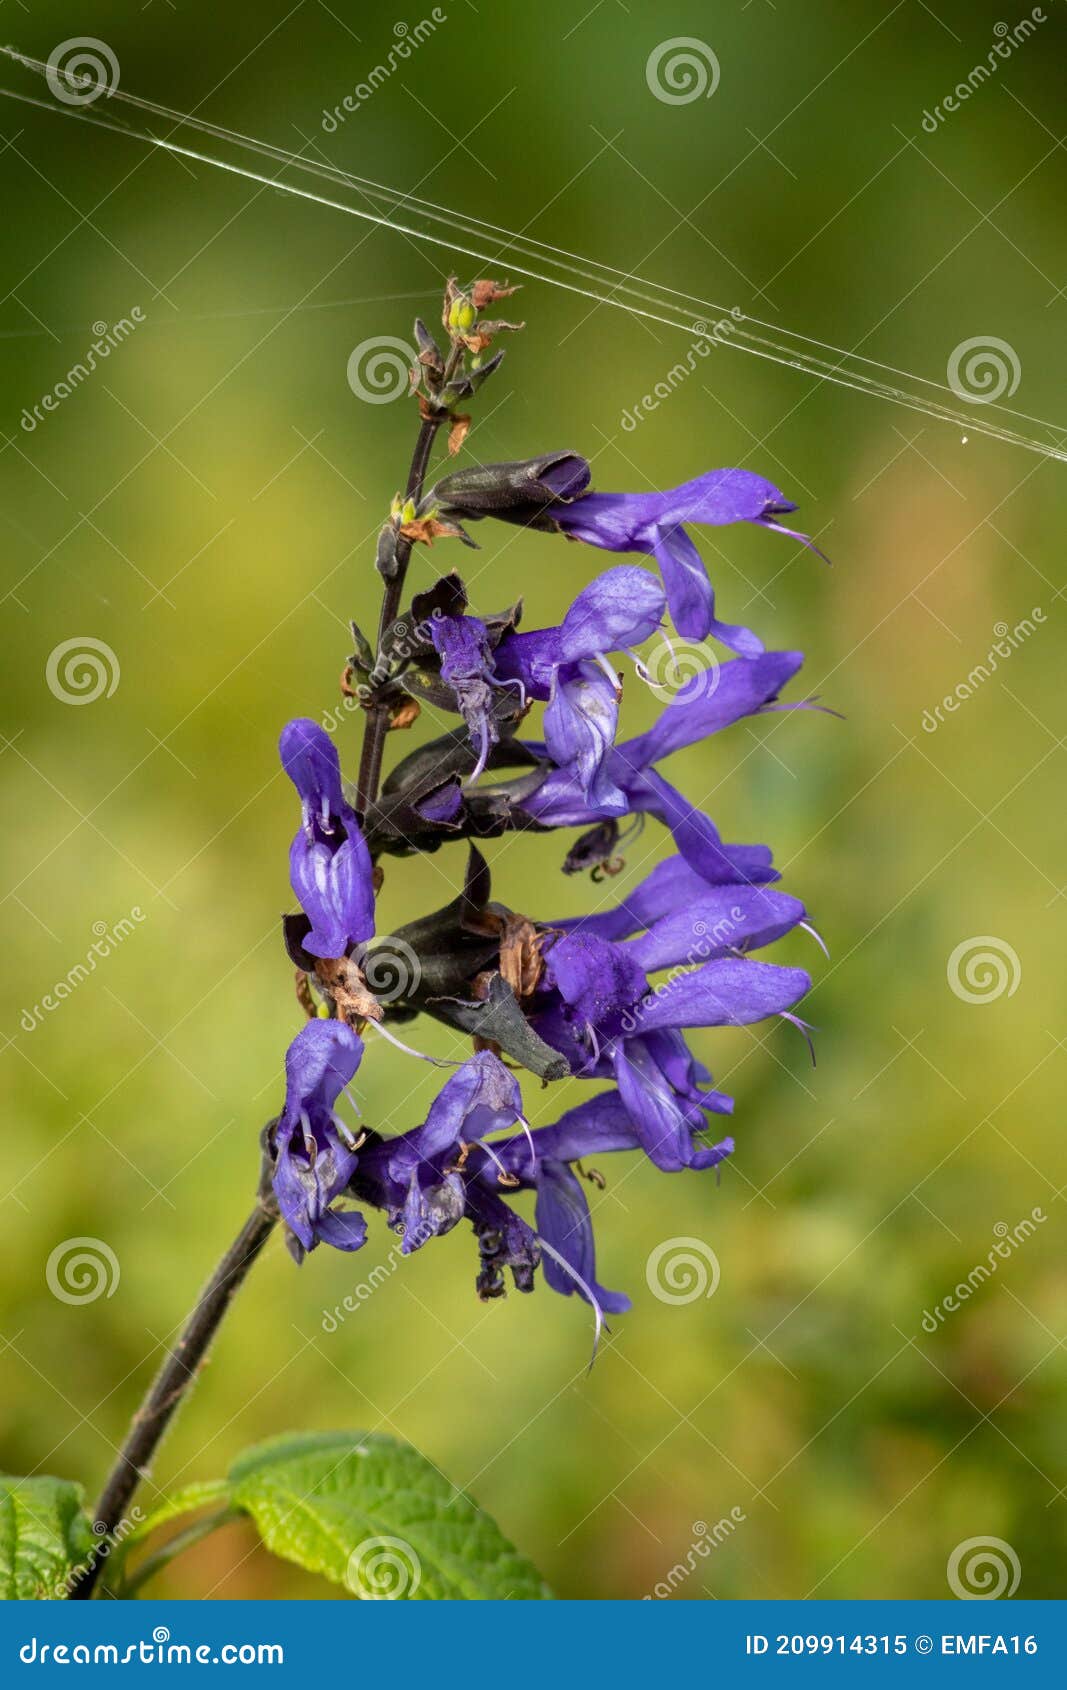 spider`s web on a purple salvia amistad / sage flower in an english garden